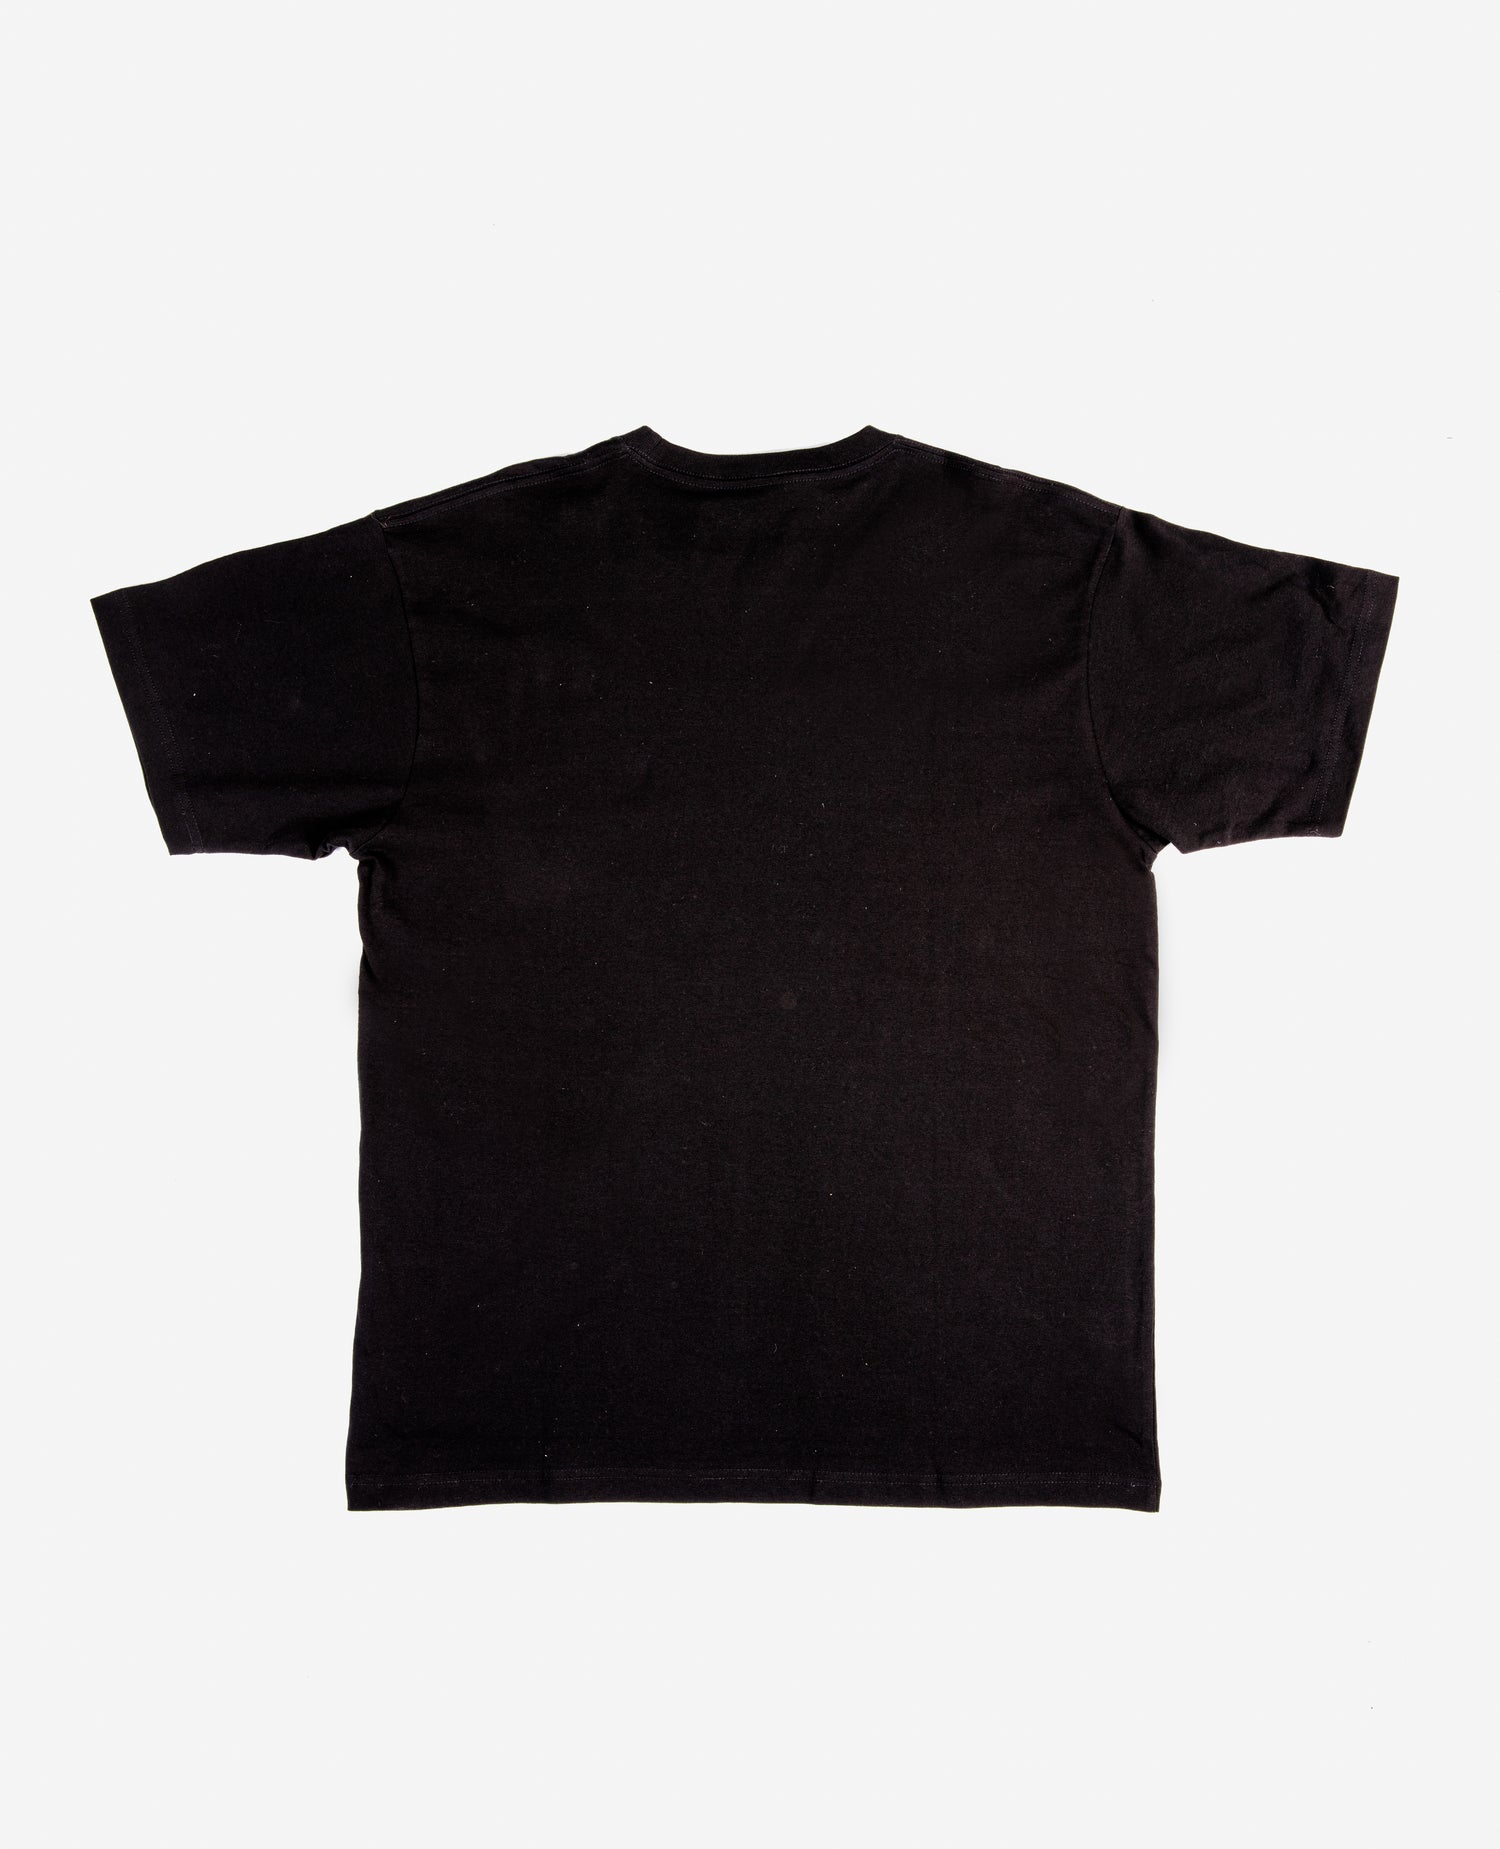 Patta Soundsystem x Wax Poetics T-Shirt (Black/Orange)